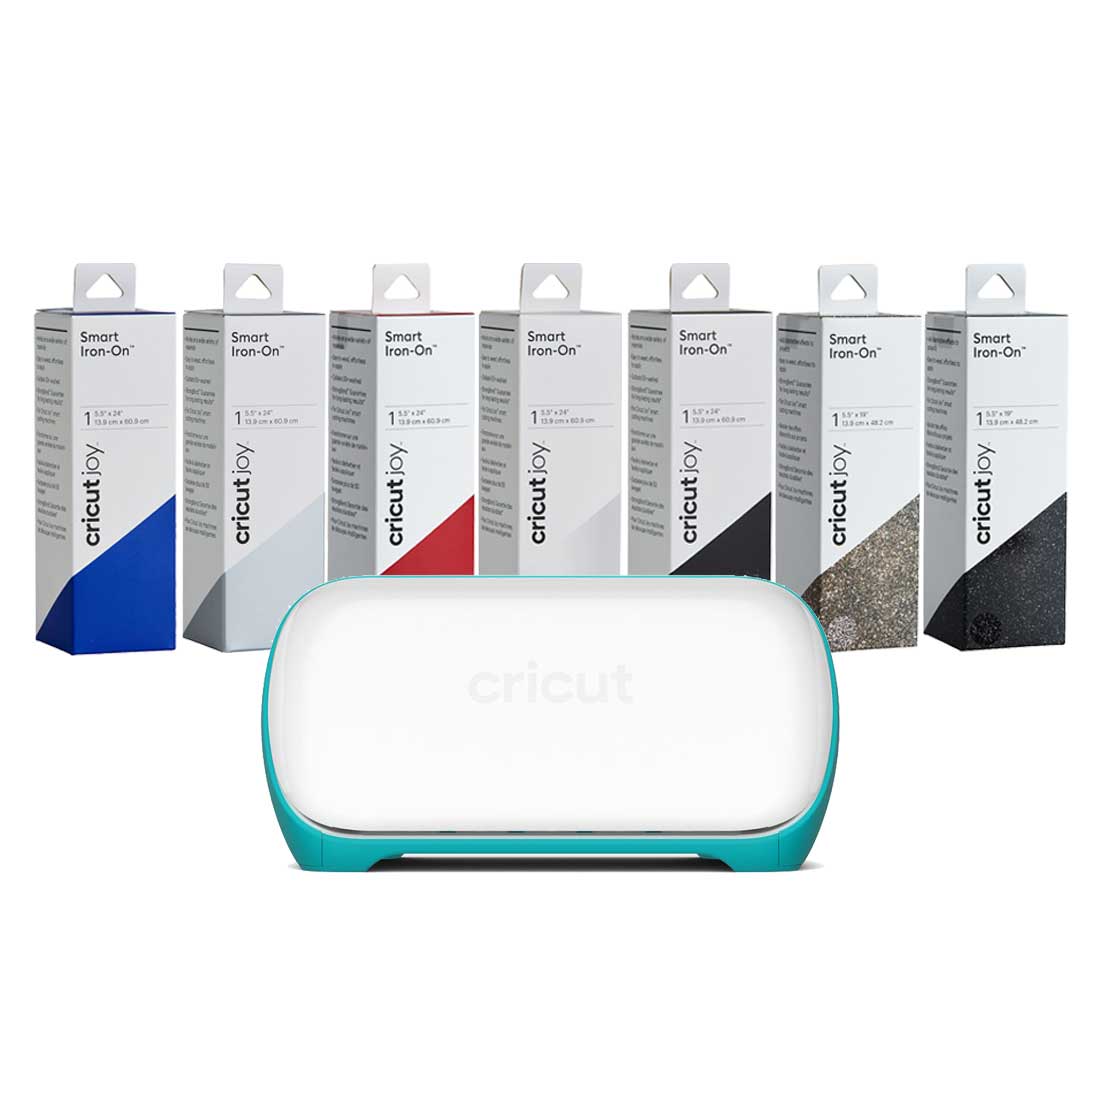  Cricut Joy Smart StrongBond Iron-On Bundle - Red, White, Blue